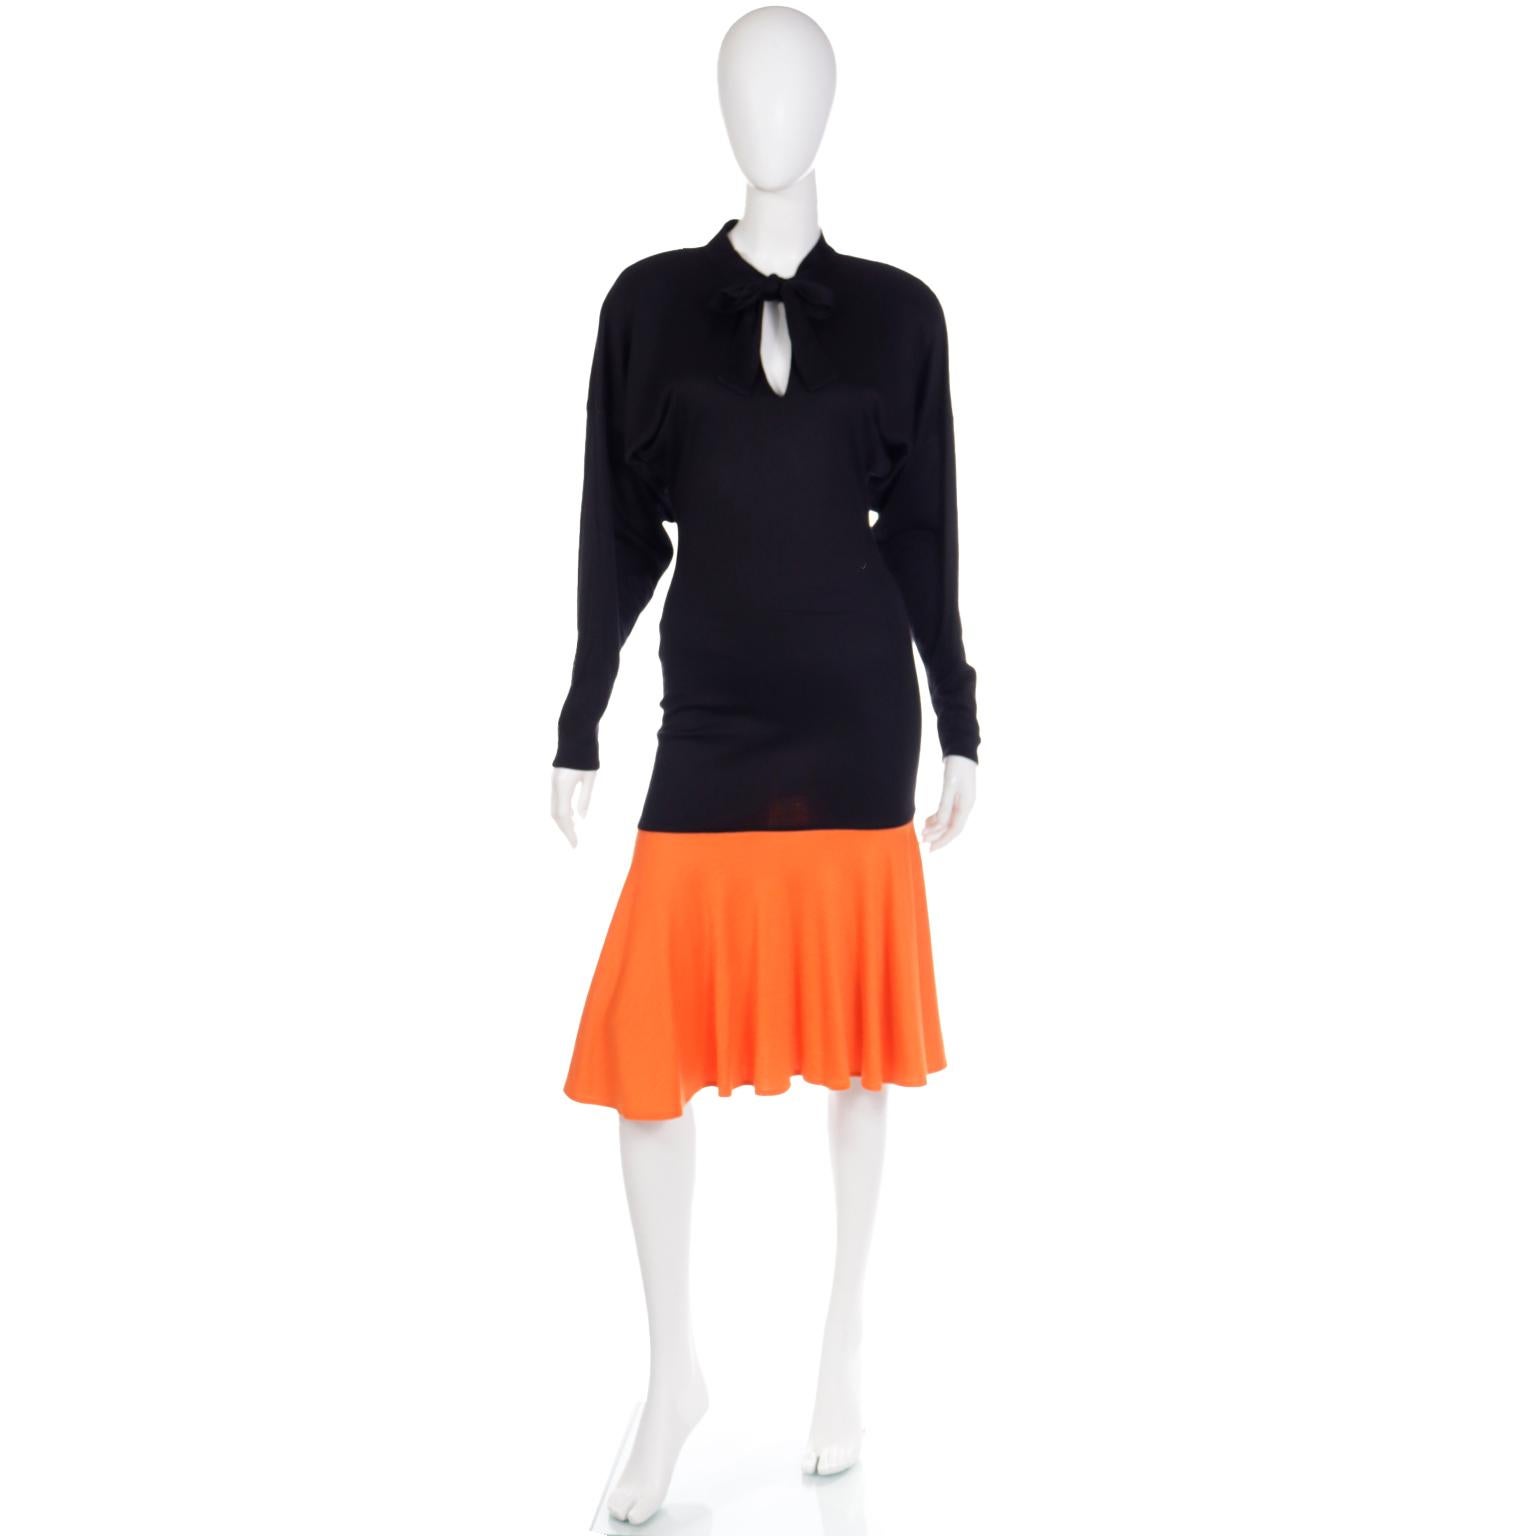 Rare Patrick Kelly Paris F/W 1988 Black & Orange Color Block Vintage Dress In Excellent Condition For Sale In Portland, OR